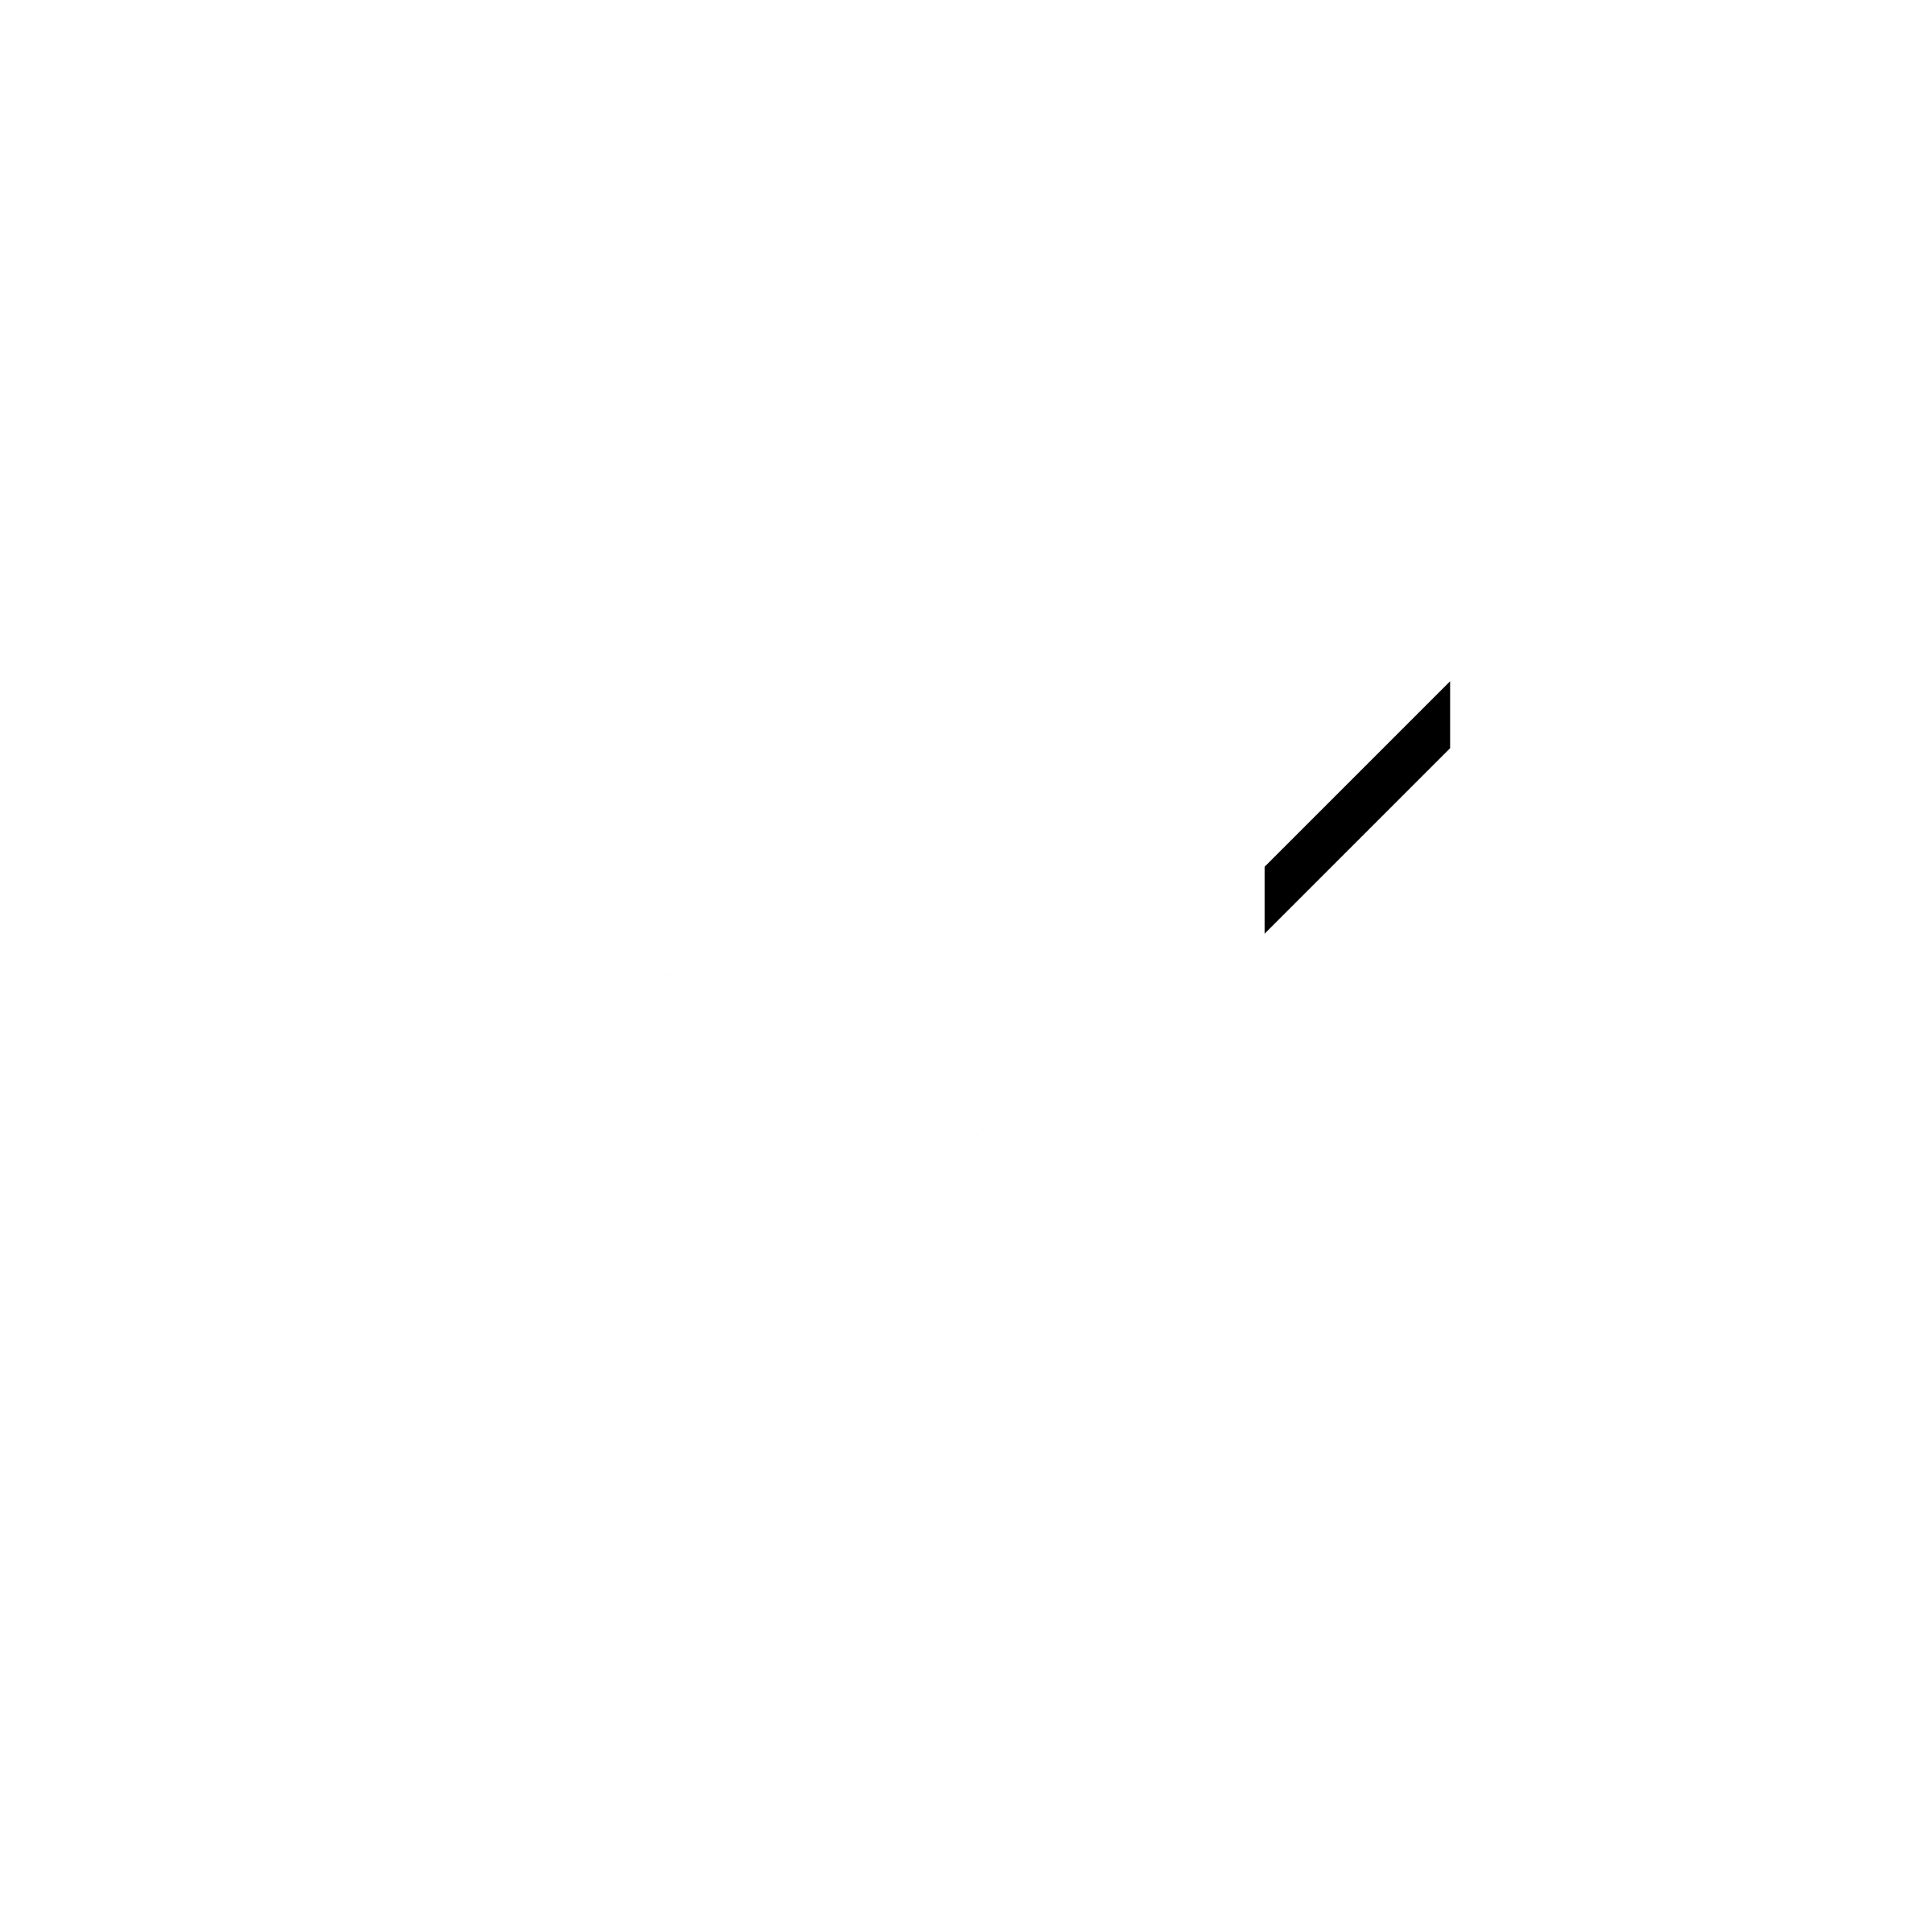 Experian Logo - Experian Logo PNG Transparent & SVG Vector - Freebie Supply